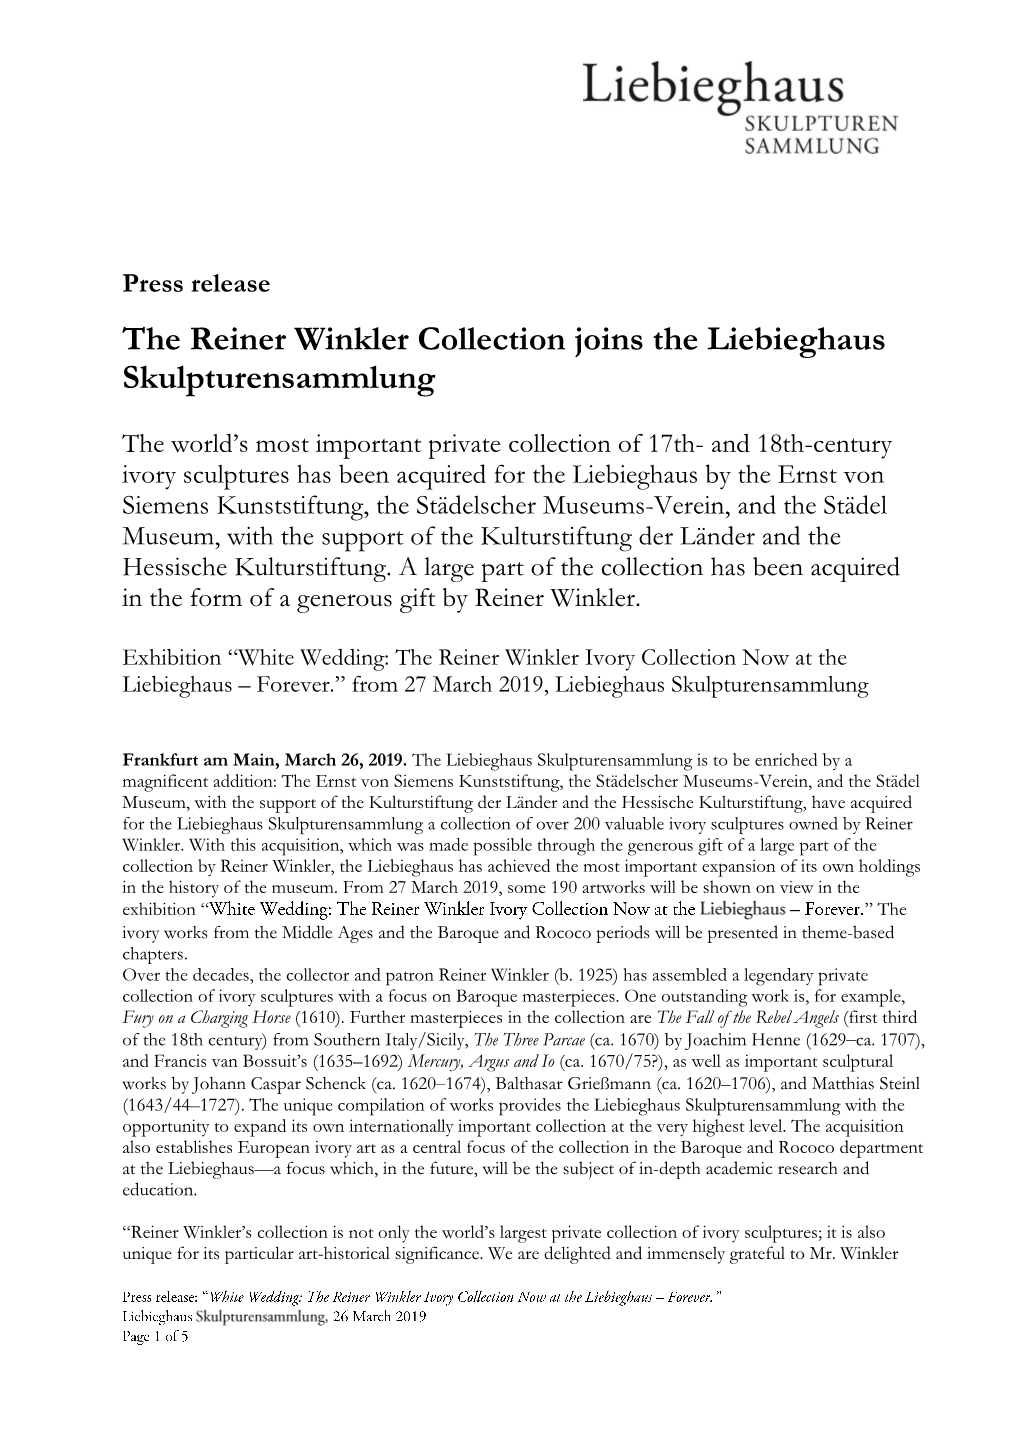 The Reiner Winkler Collection Joins the Liebieghaus Skulpturensammlung